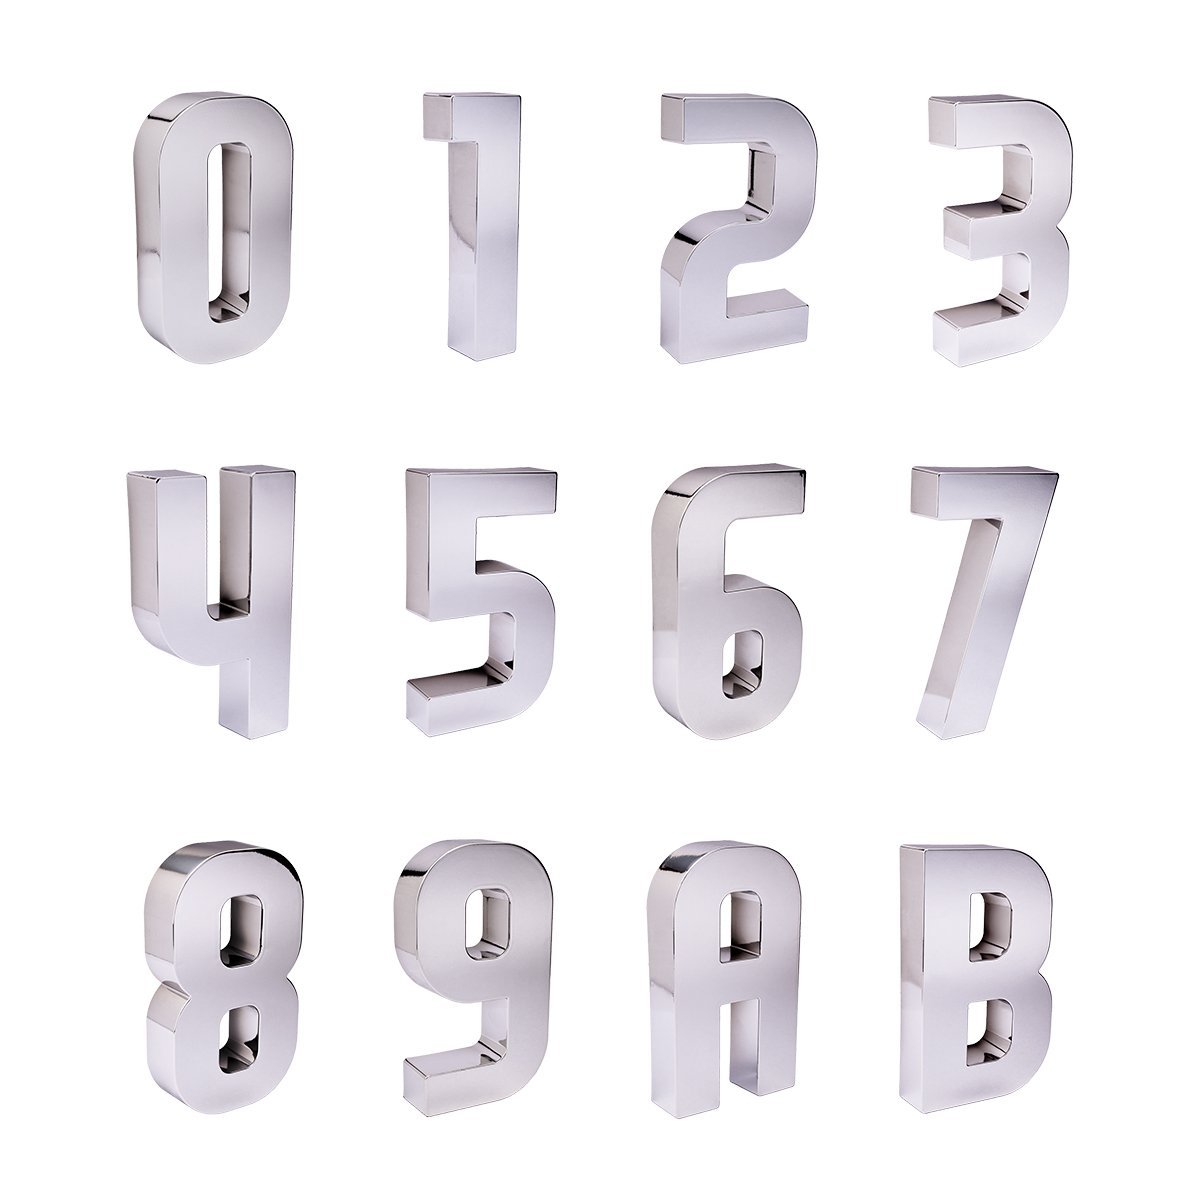 Números e Letras Residenciais / Comerciais Cromado 3D 19cm:1 - 2